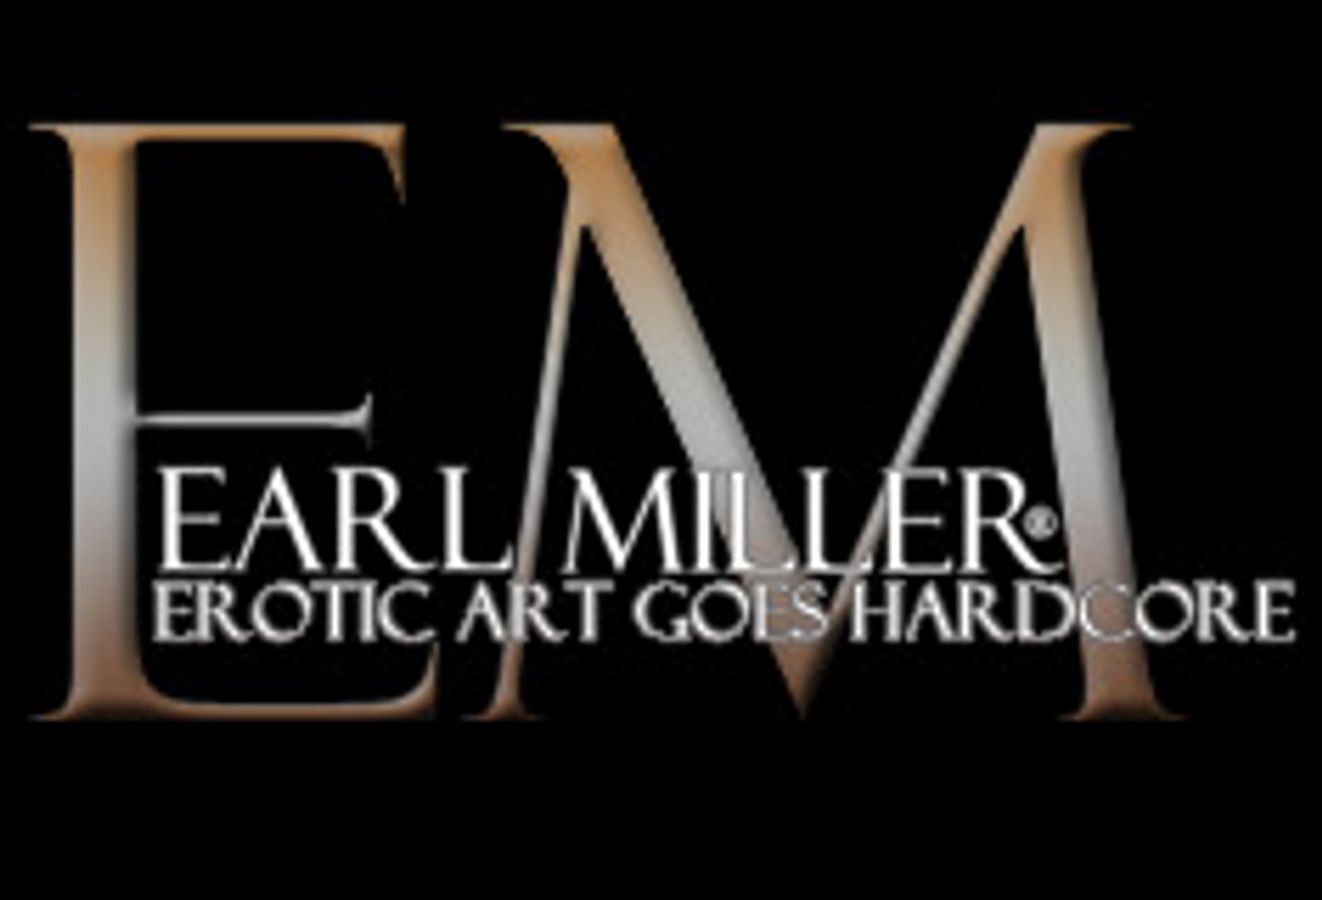 Earl Miller Photography, Inc.